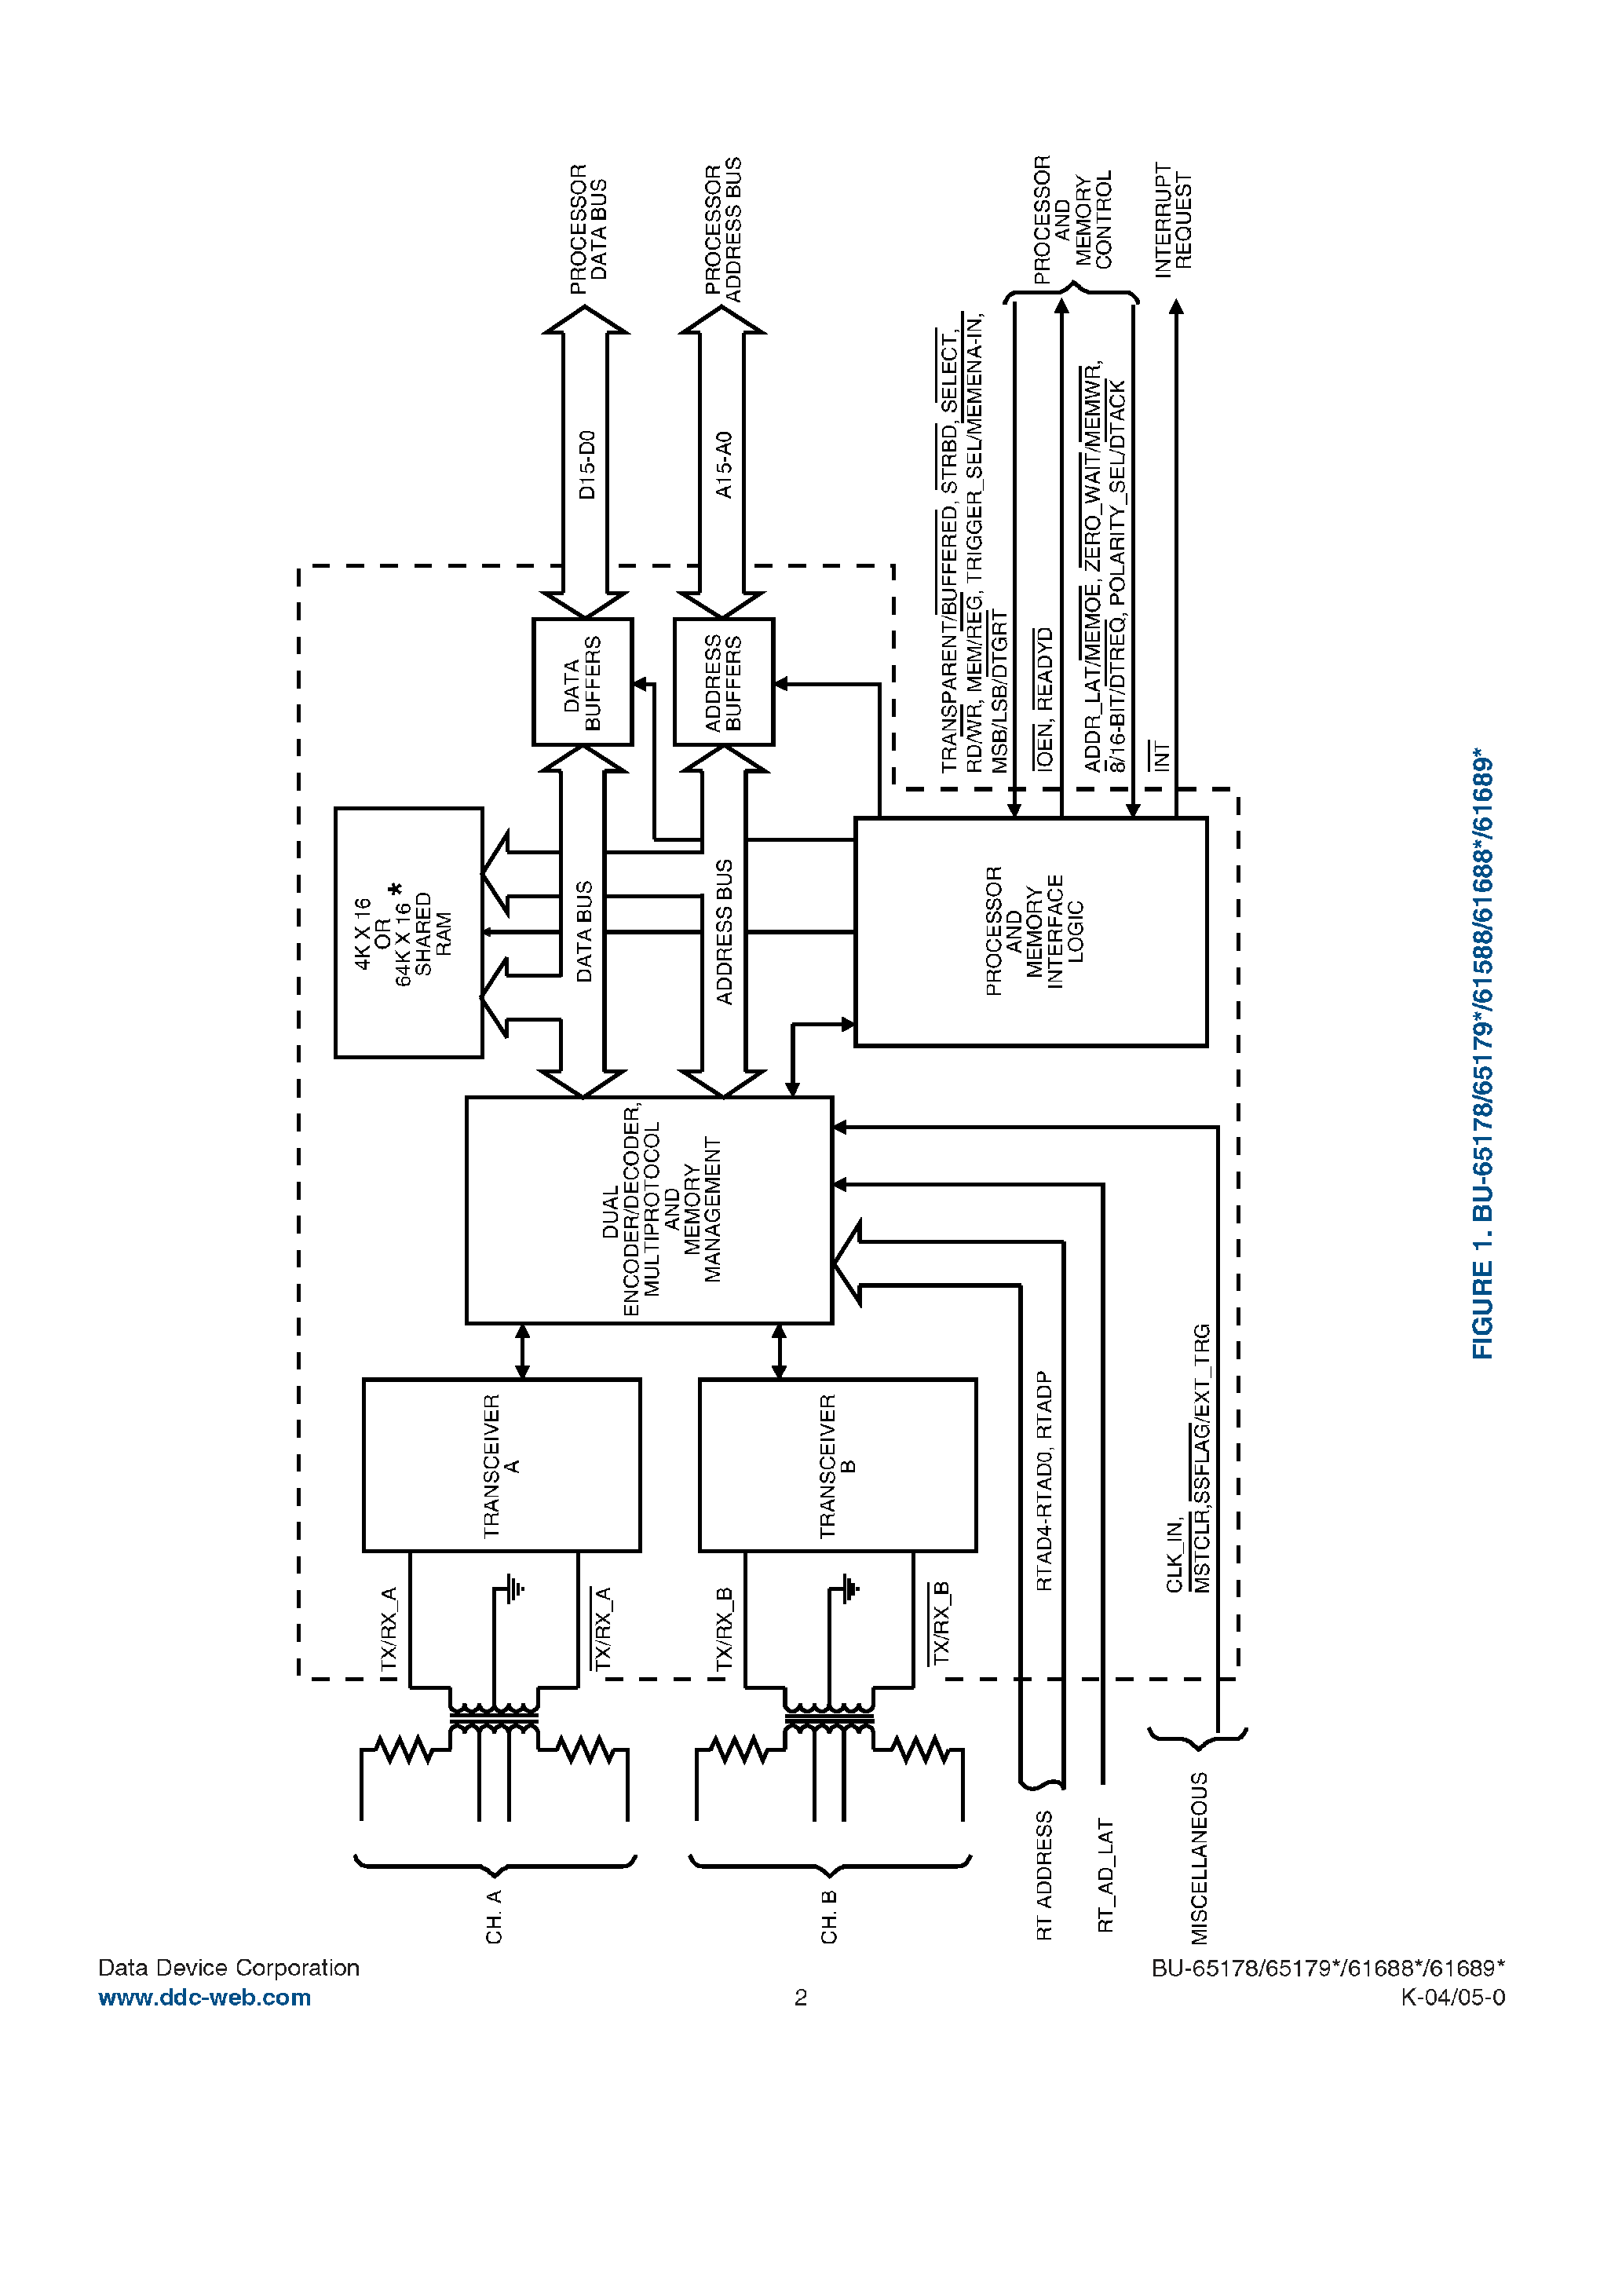 Datasheet BU-61688 - Miniature Advanced Communication Engine and Mini-Ace Plus page 2